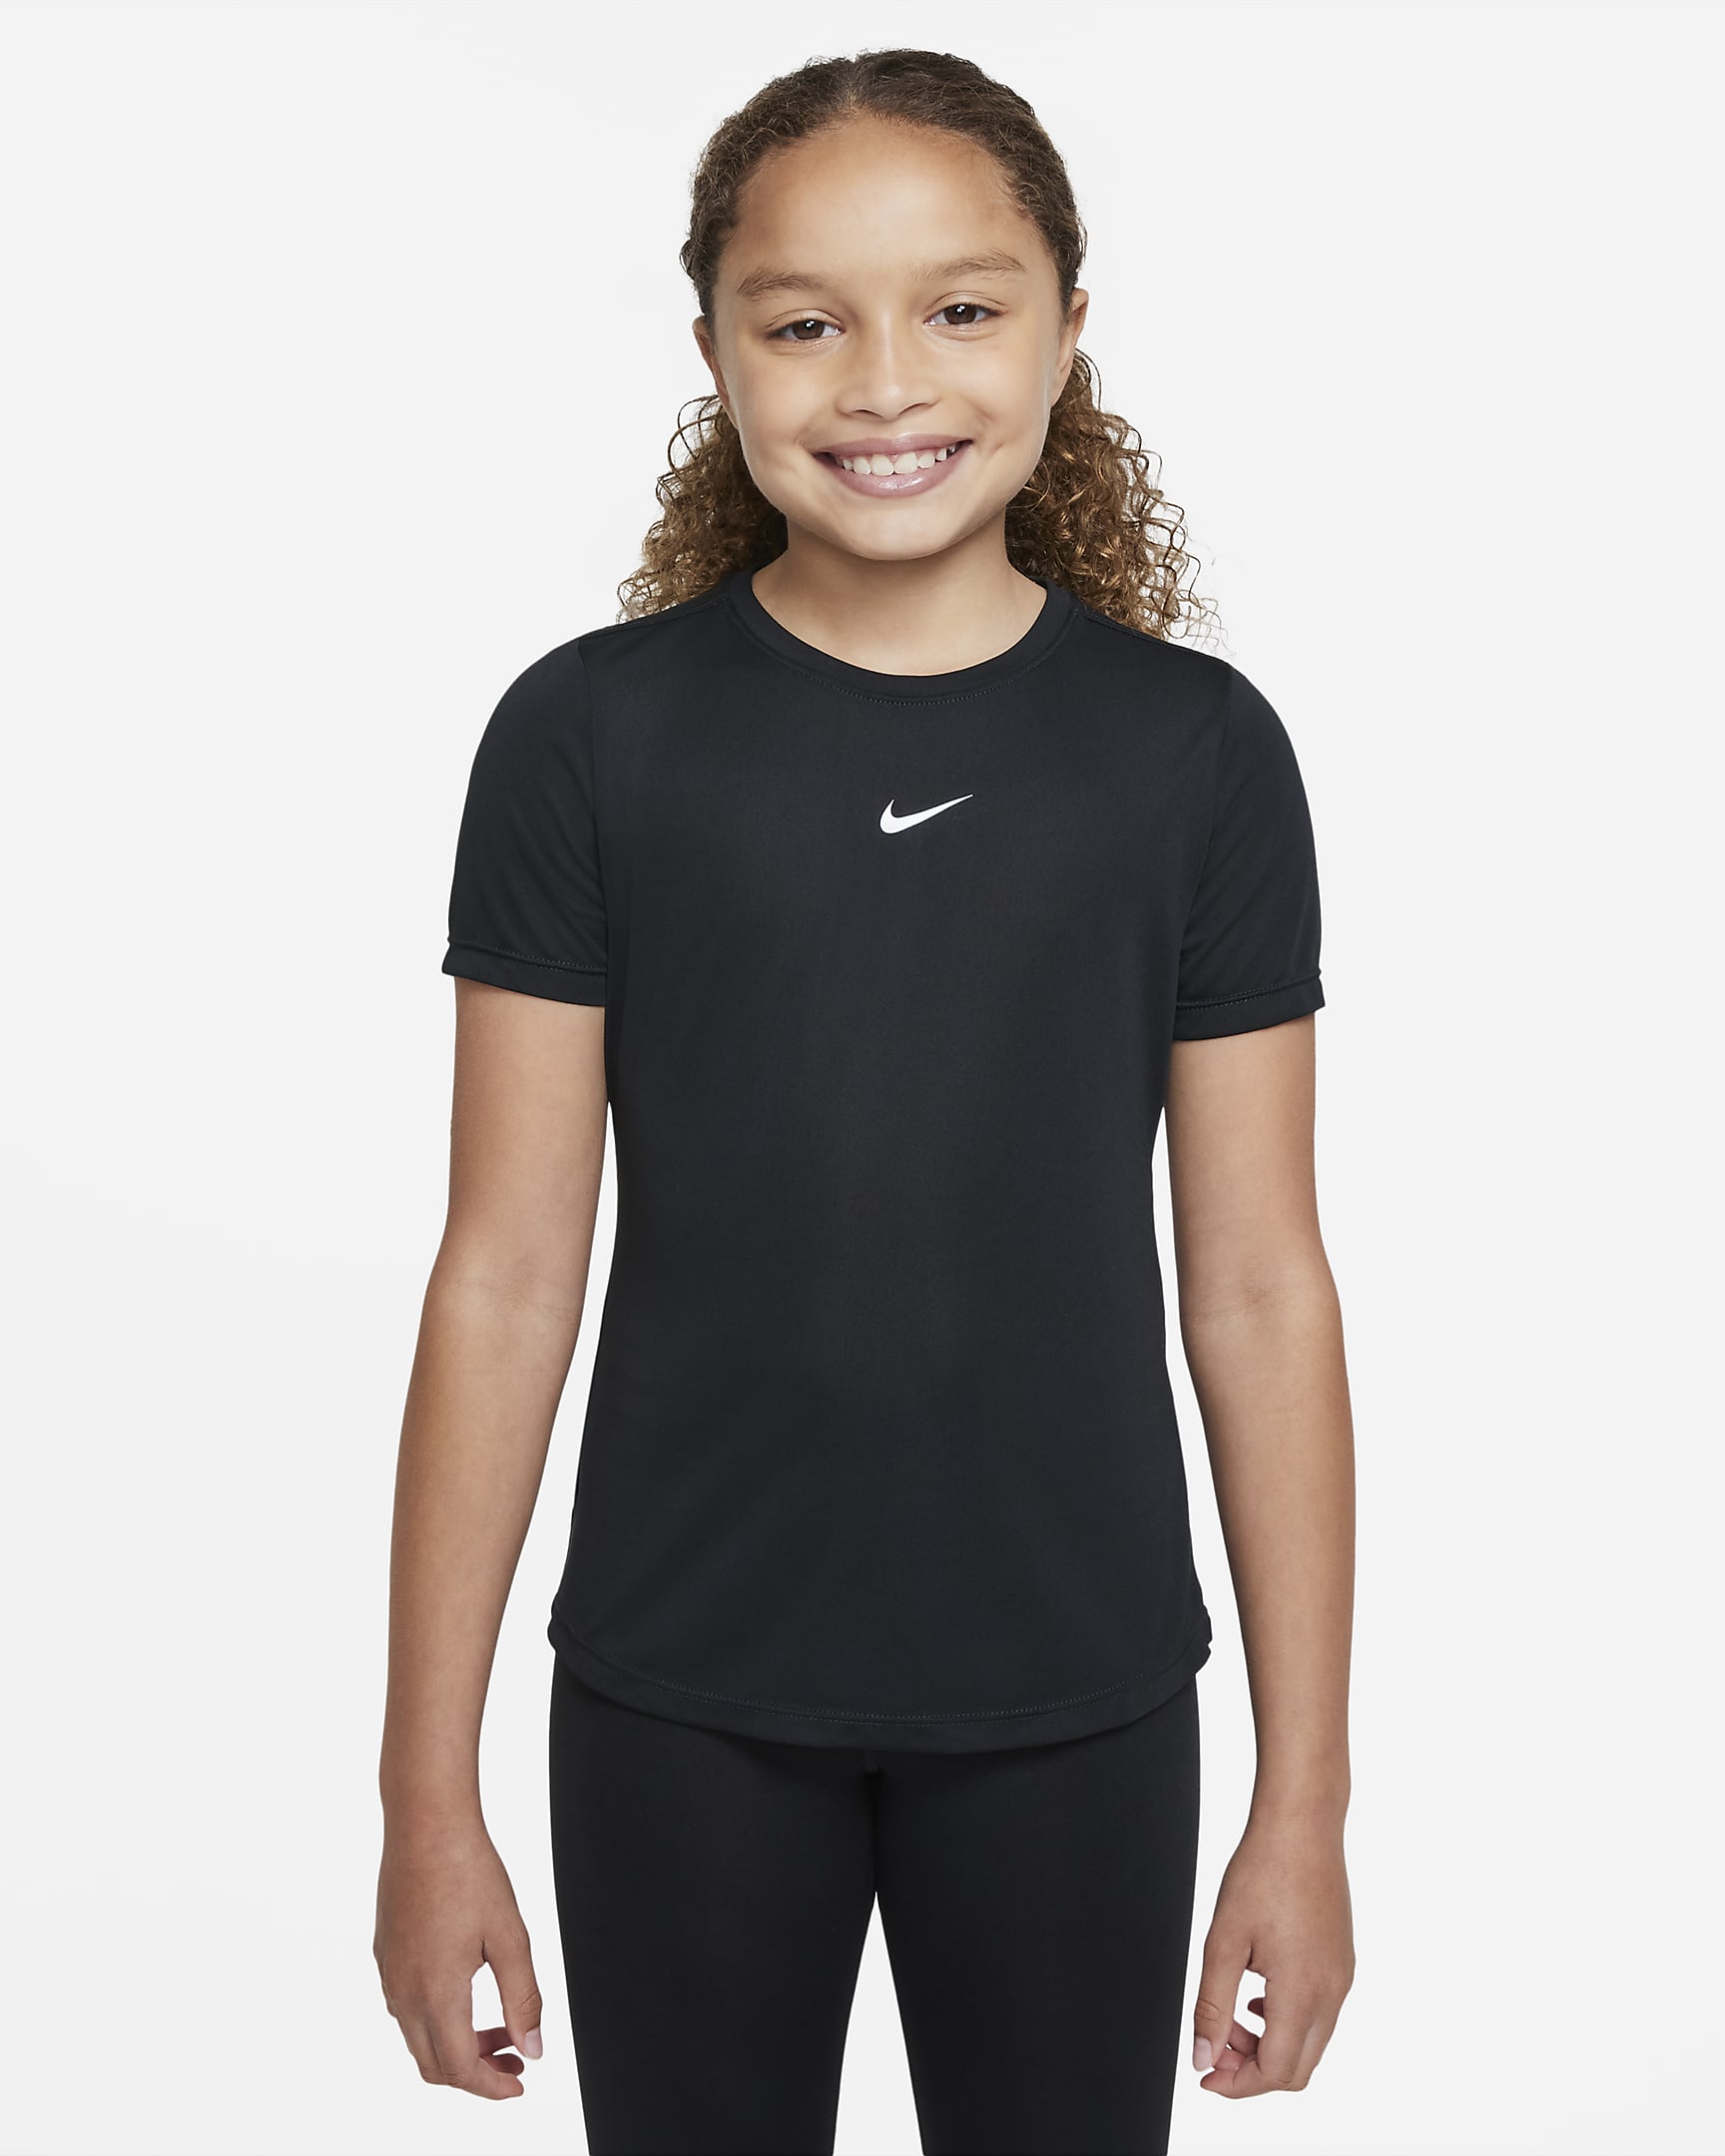 Nike One Older Kids' (Girls') Short-Sleeve Top. Nike RO